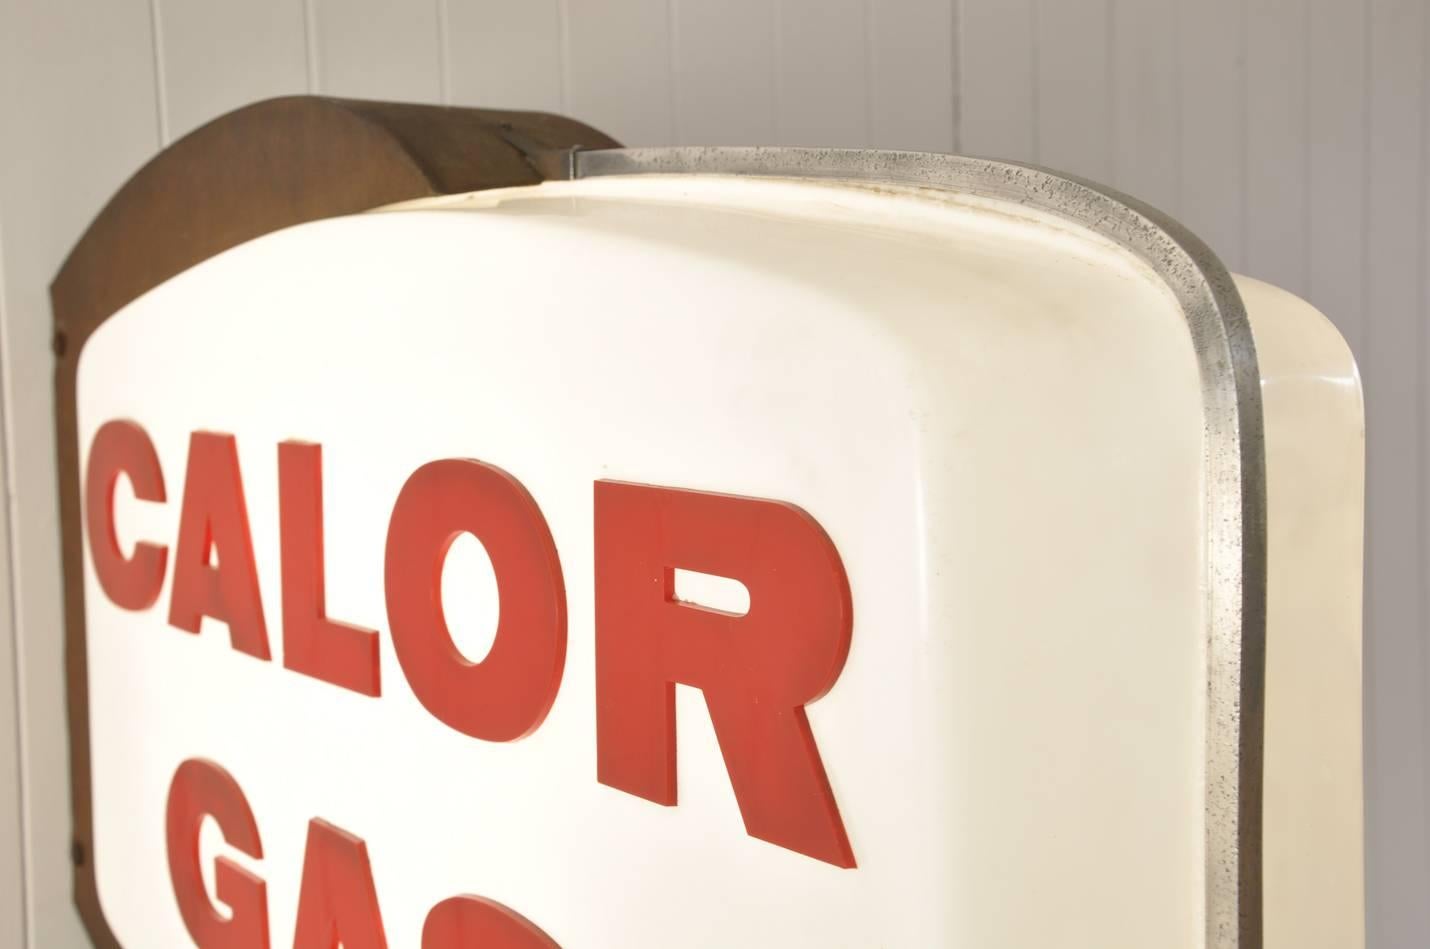 British Vintage 'Calor Gas' Advertising Light Sign For Sale